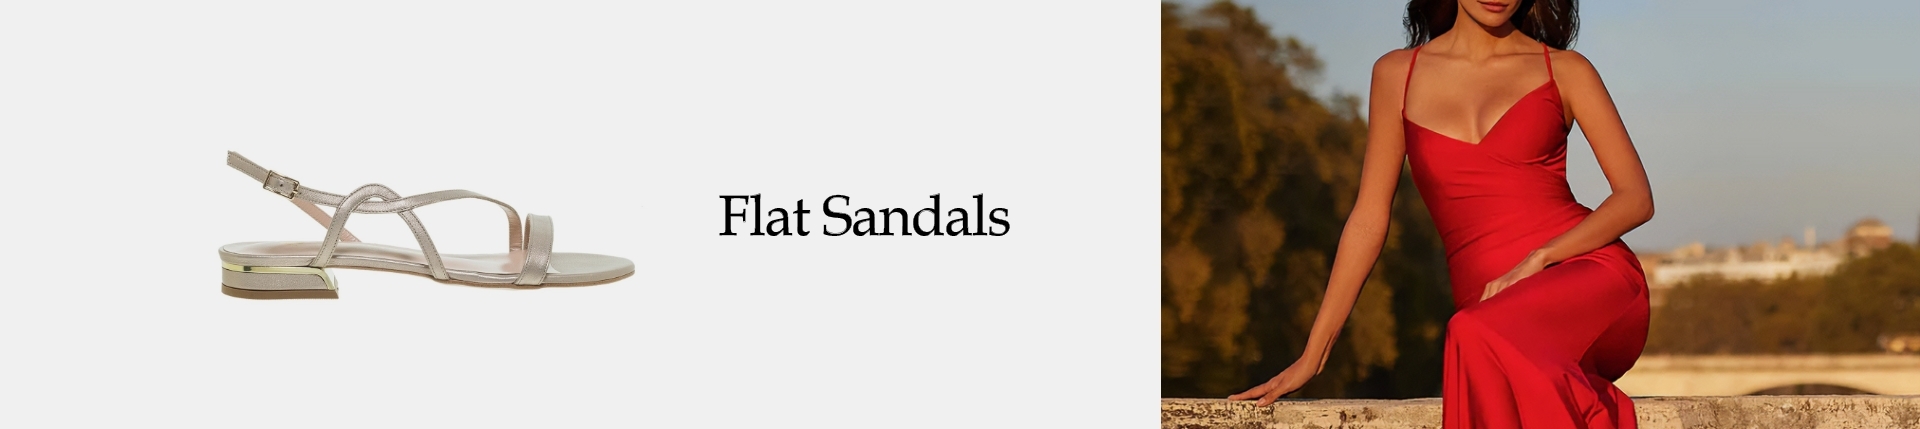 FLAT SANDALS